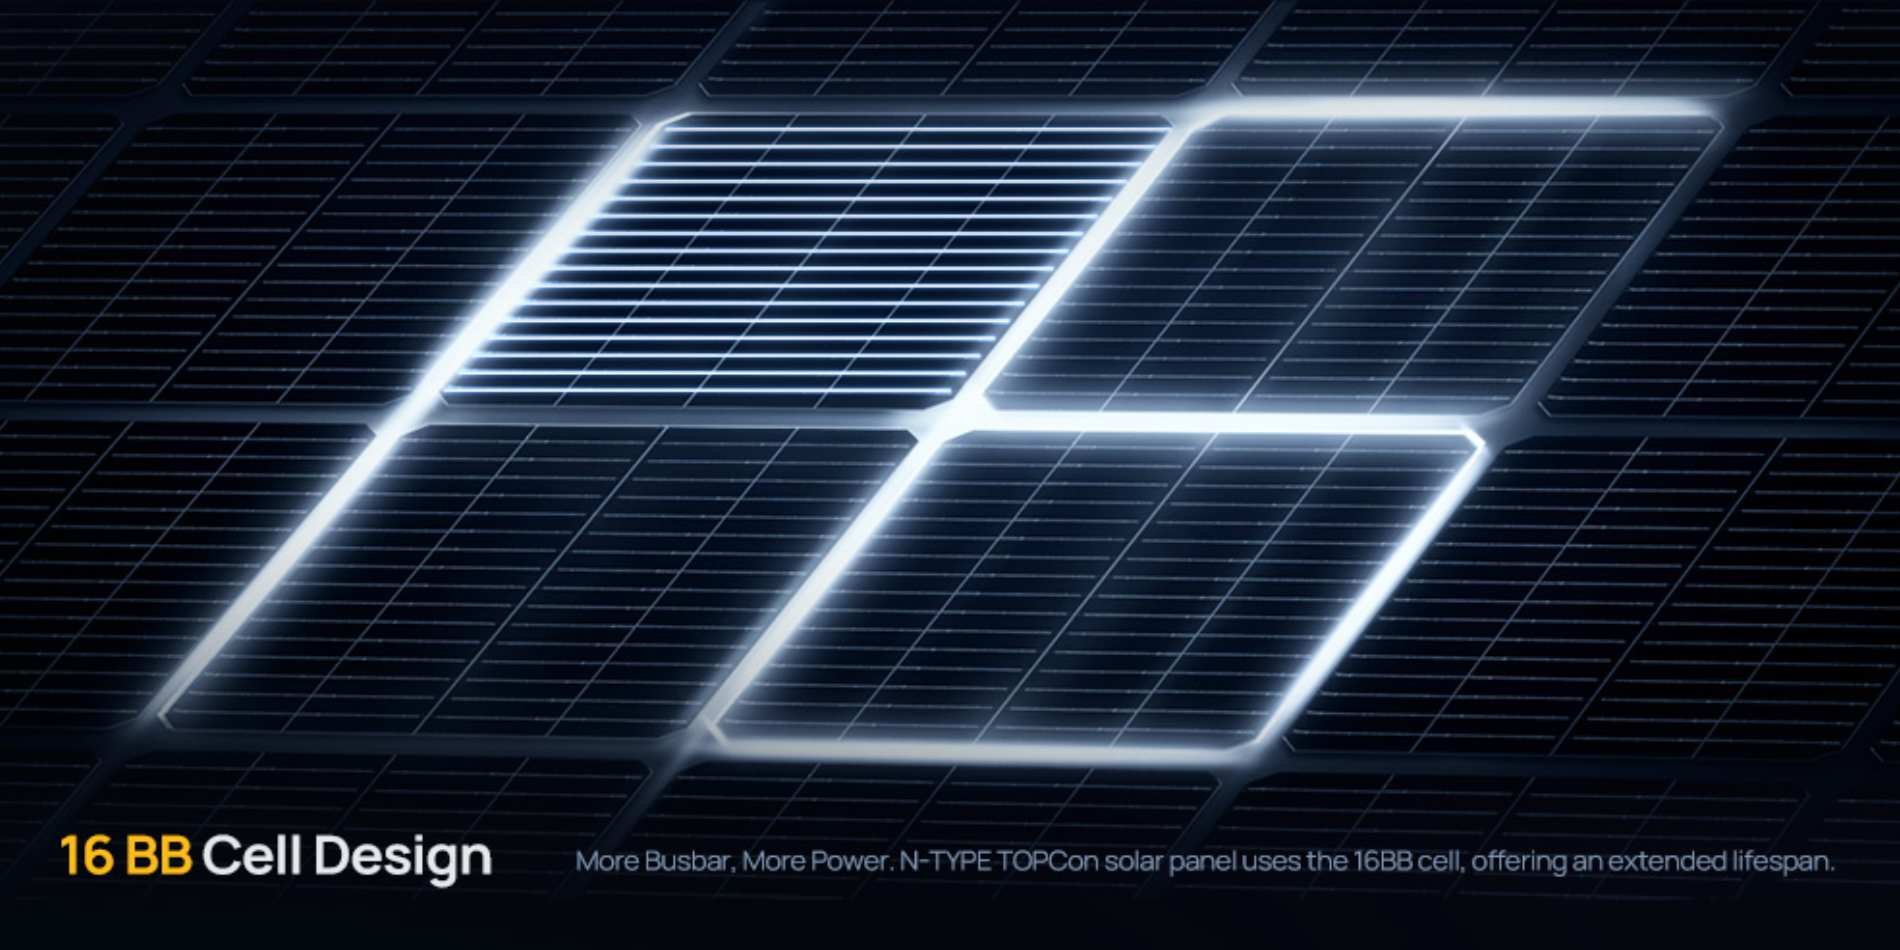 BougeRV's 16BB N-type TOPCon solar panel